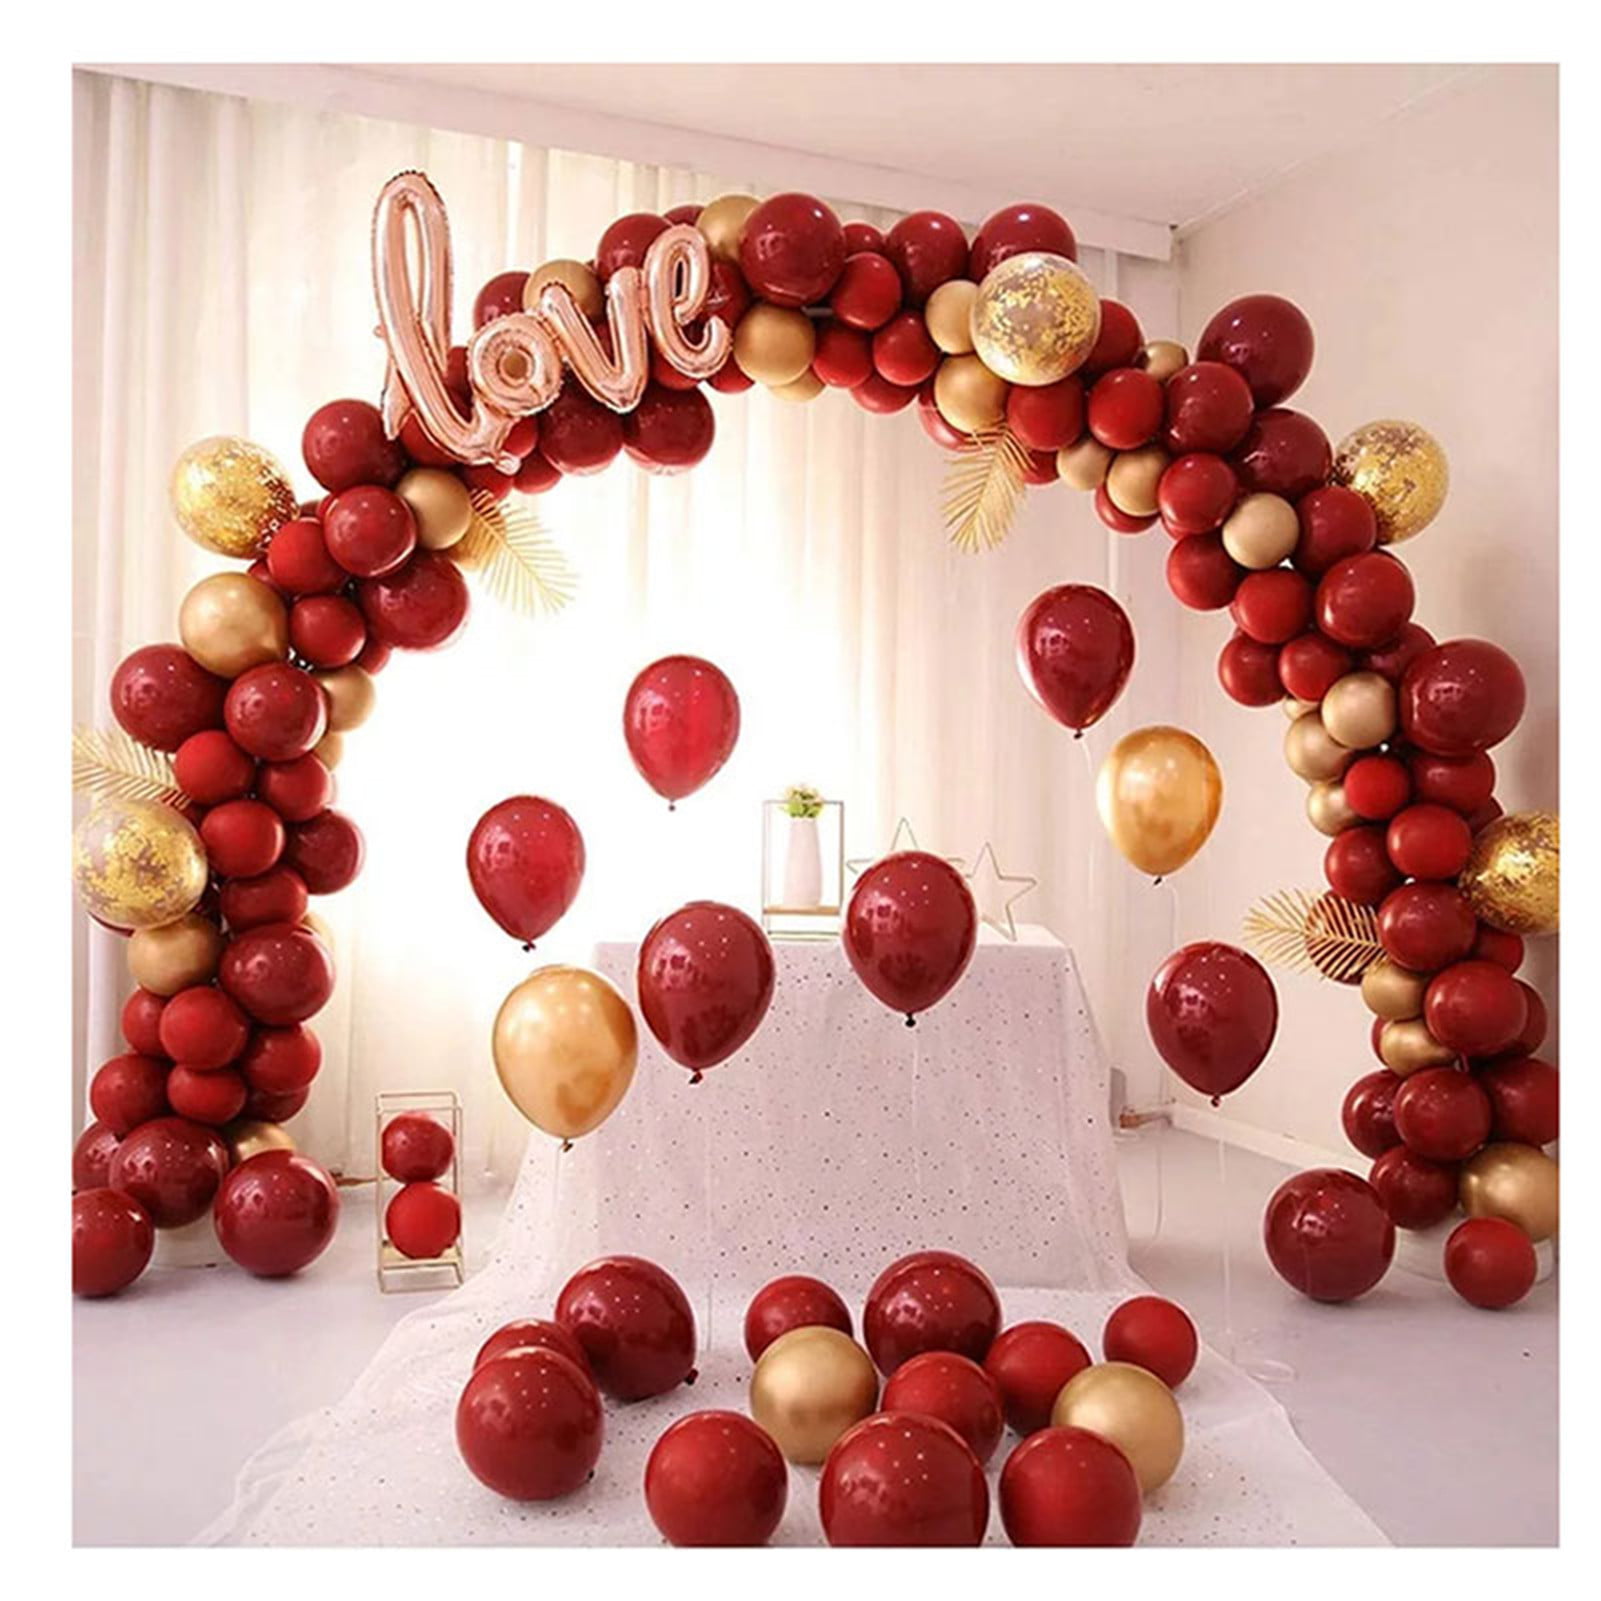 Details about   Romantic Wedding Arch Door Background Flower Balloon Circle Rack Decor Props 